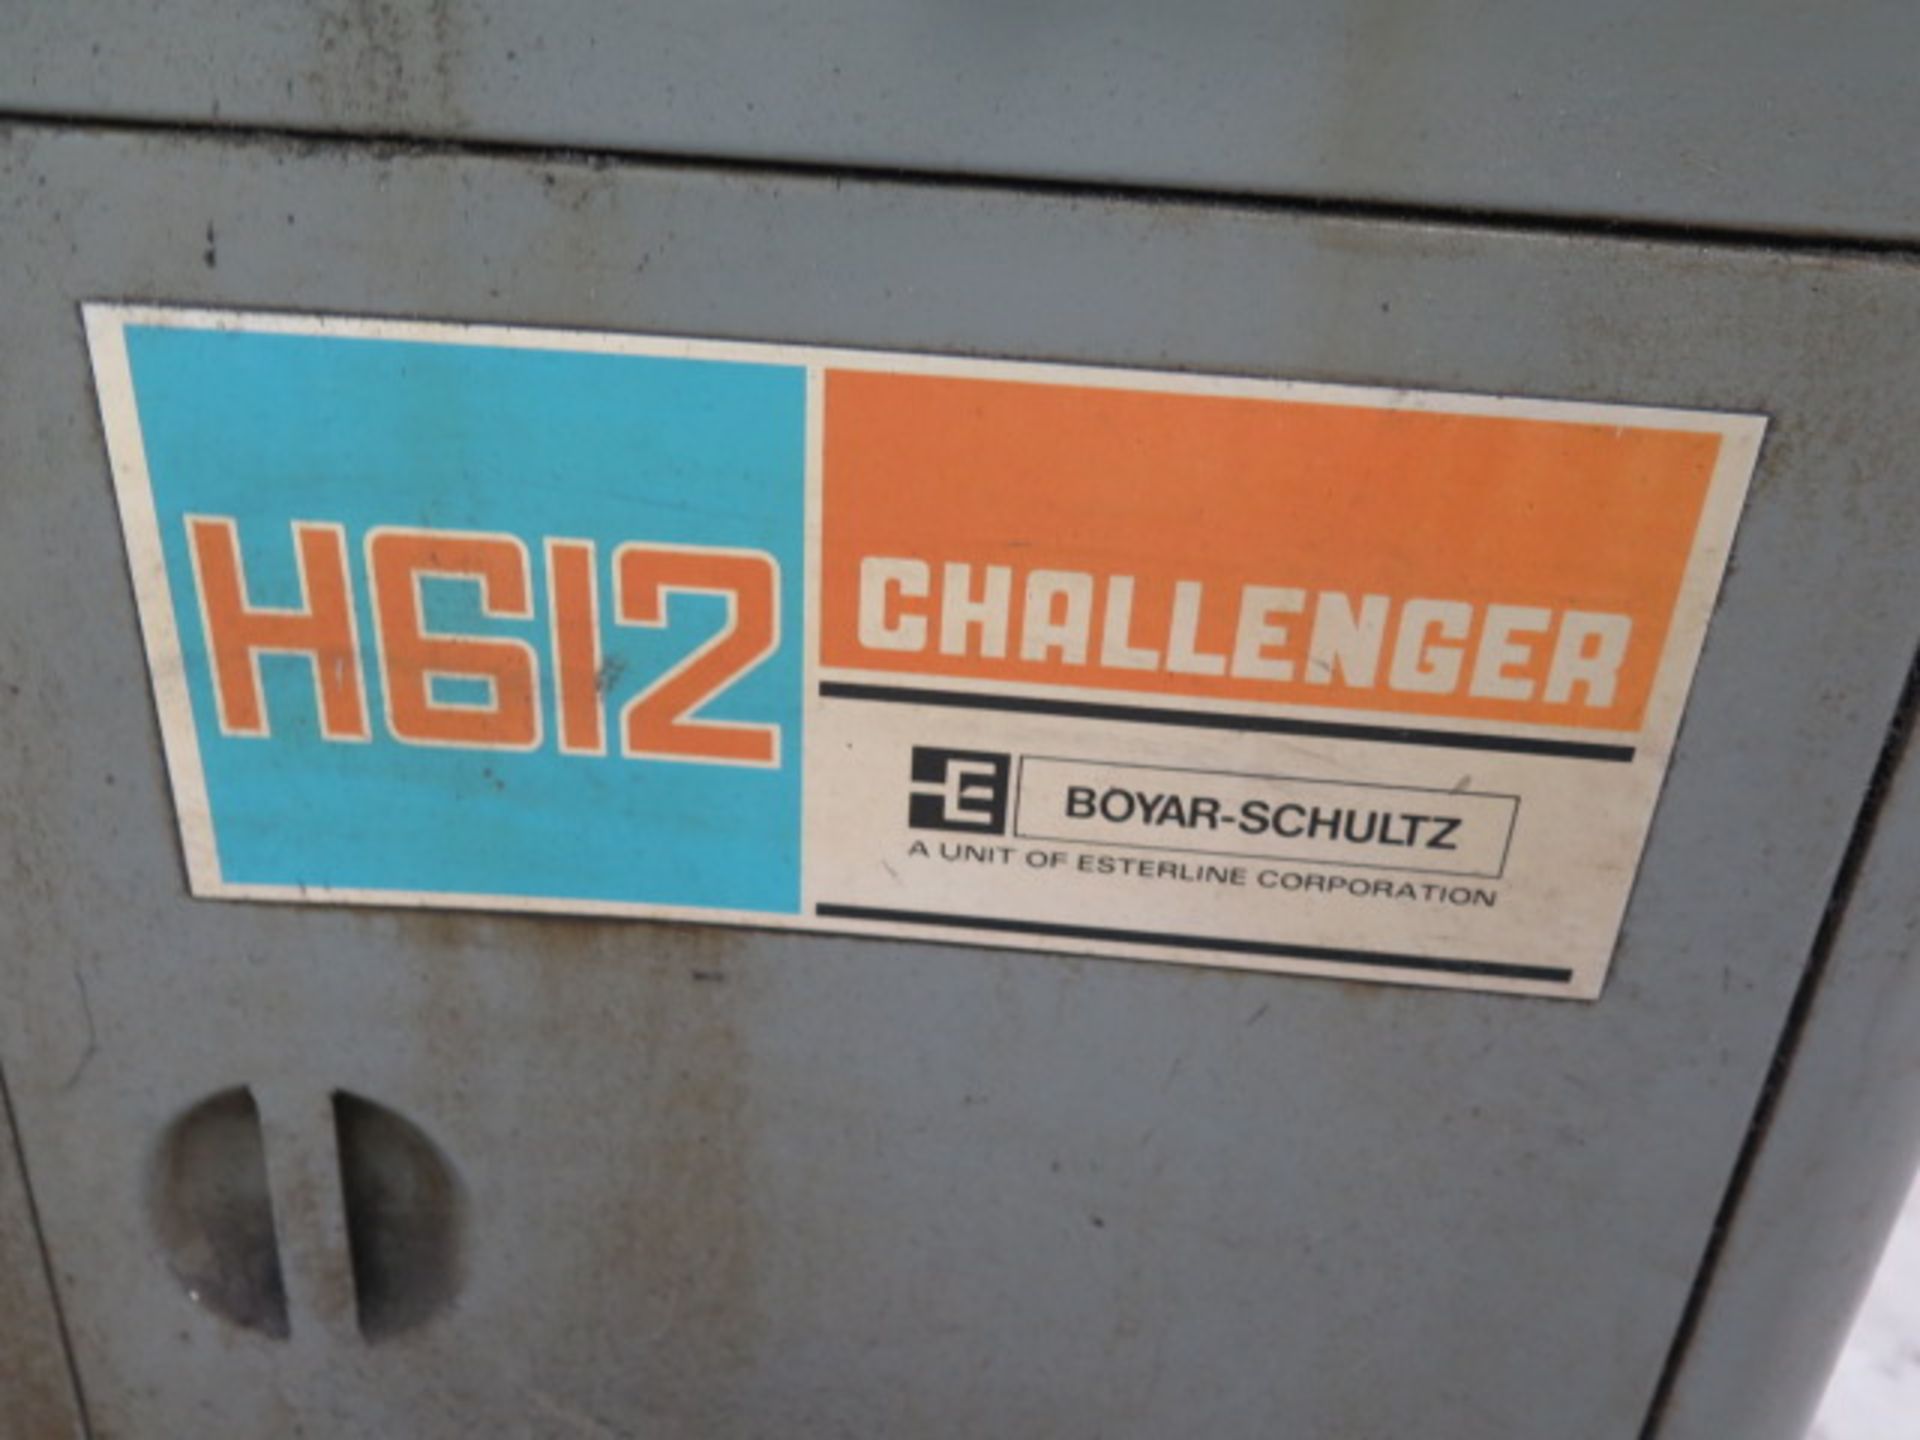 Boyar Schultz Challenger H612 6” x 12” Surface Grinder s/n 22899 w/ Walker Electromagnetic Chuck - Image 4 of 8